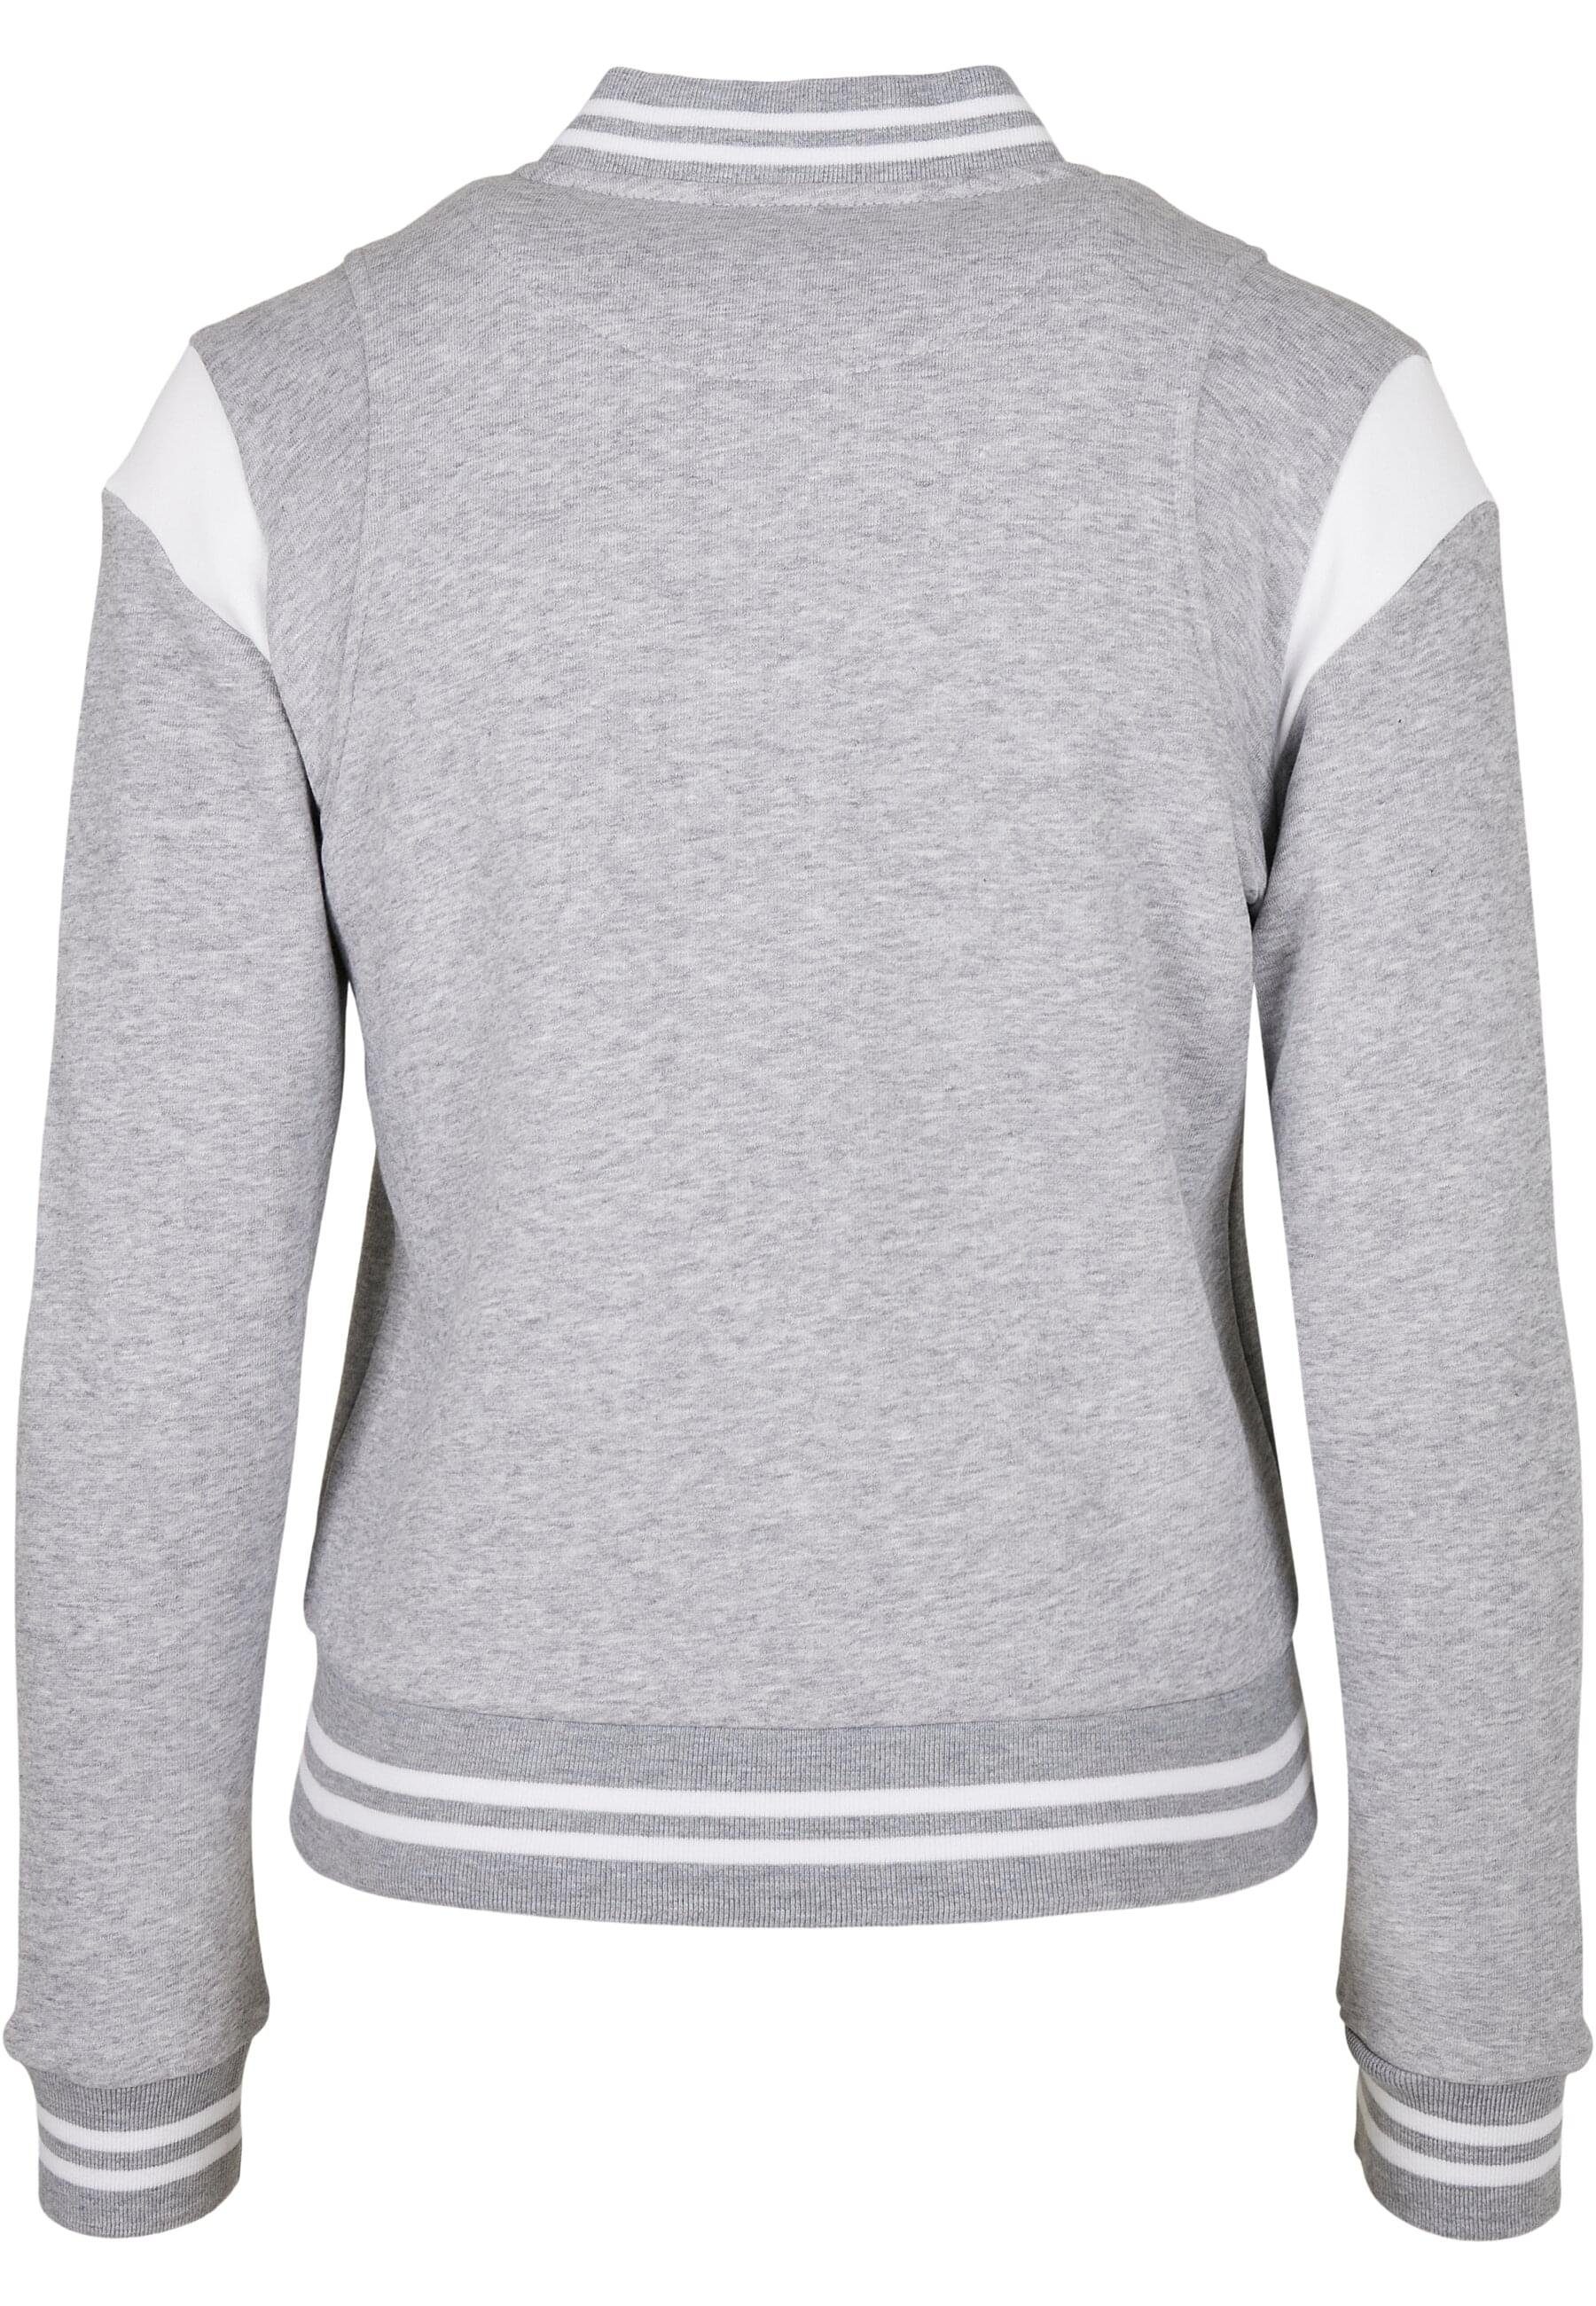 URBAN Inset CLASSICS (1-St) grey/white Ladies Collegejacke Damen Jacket College Sweat Organic